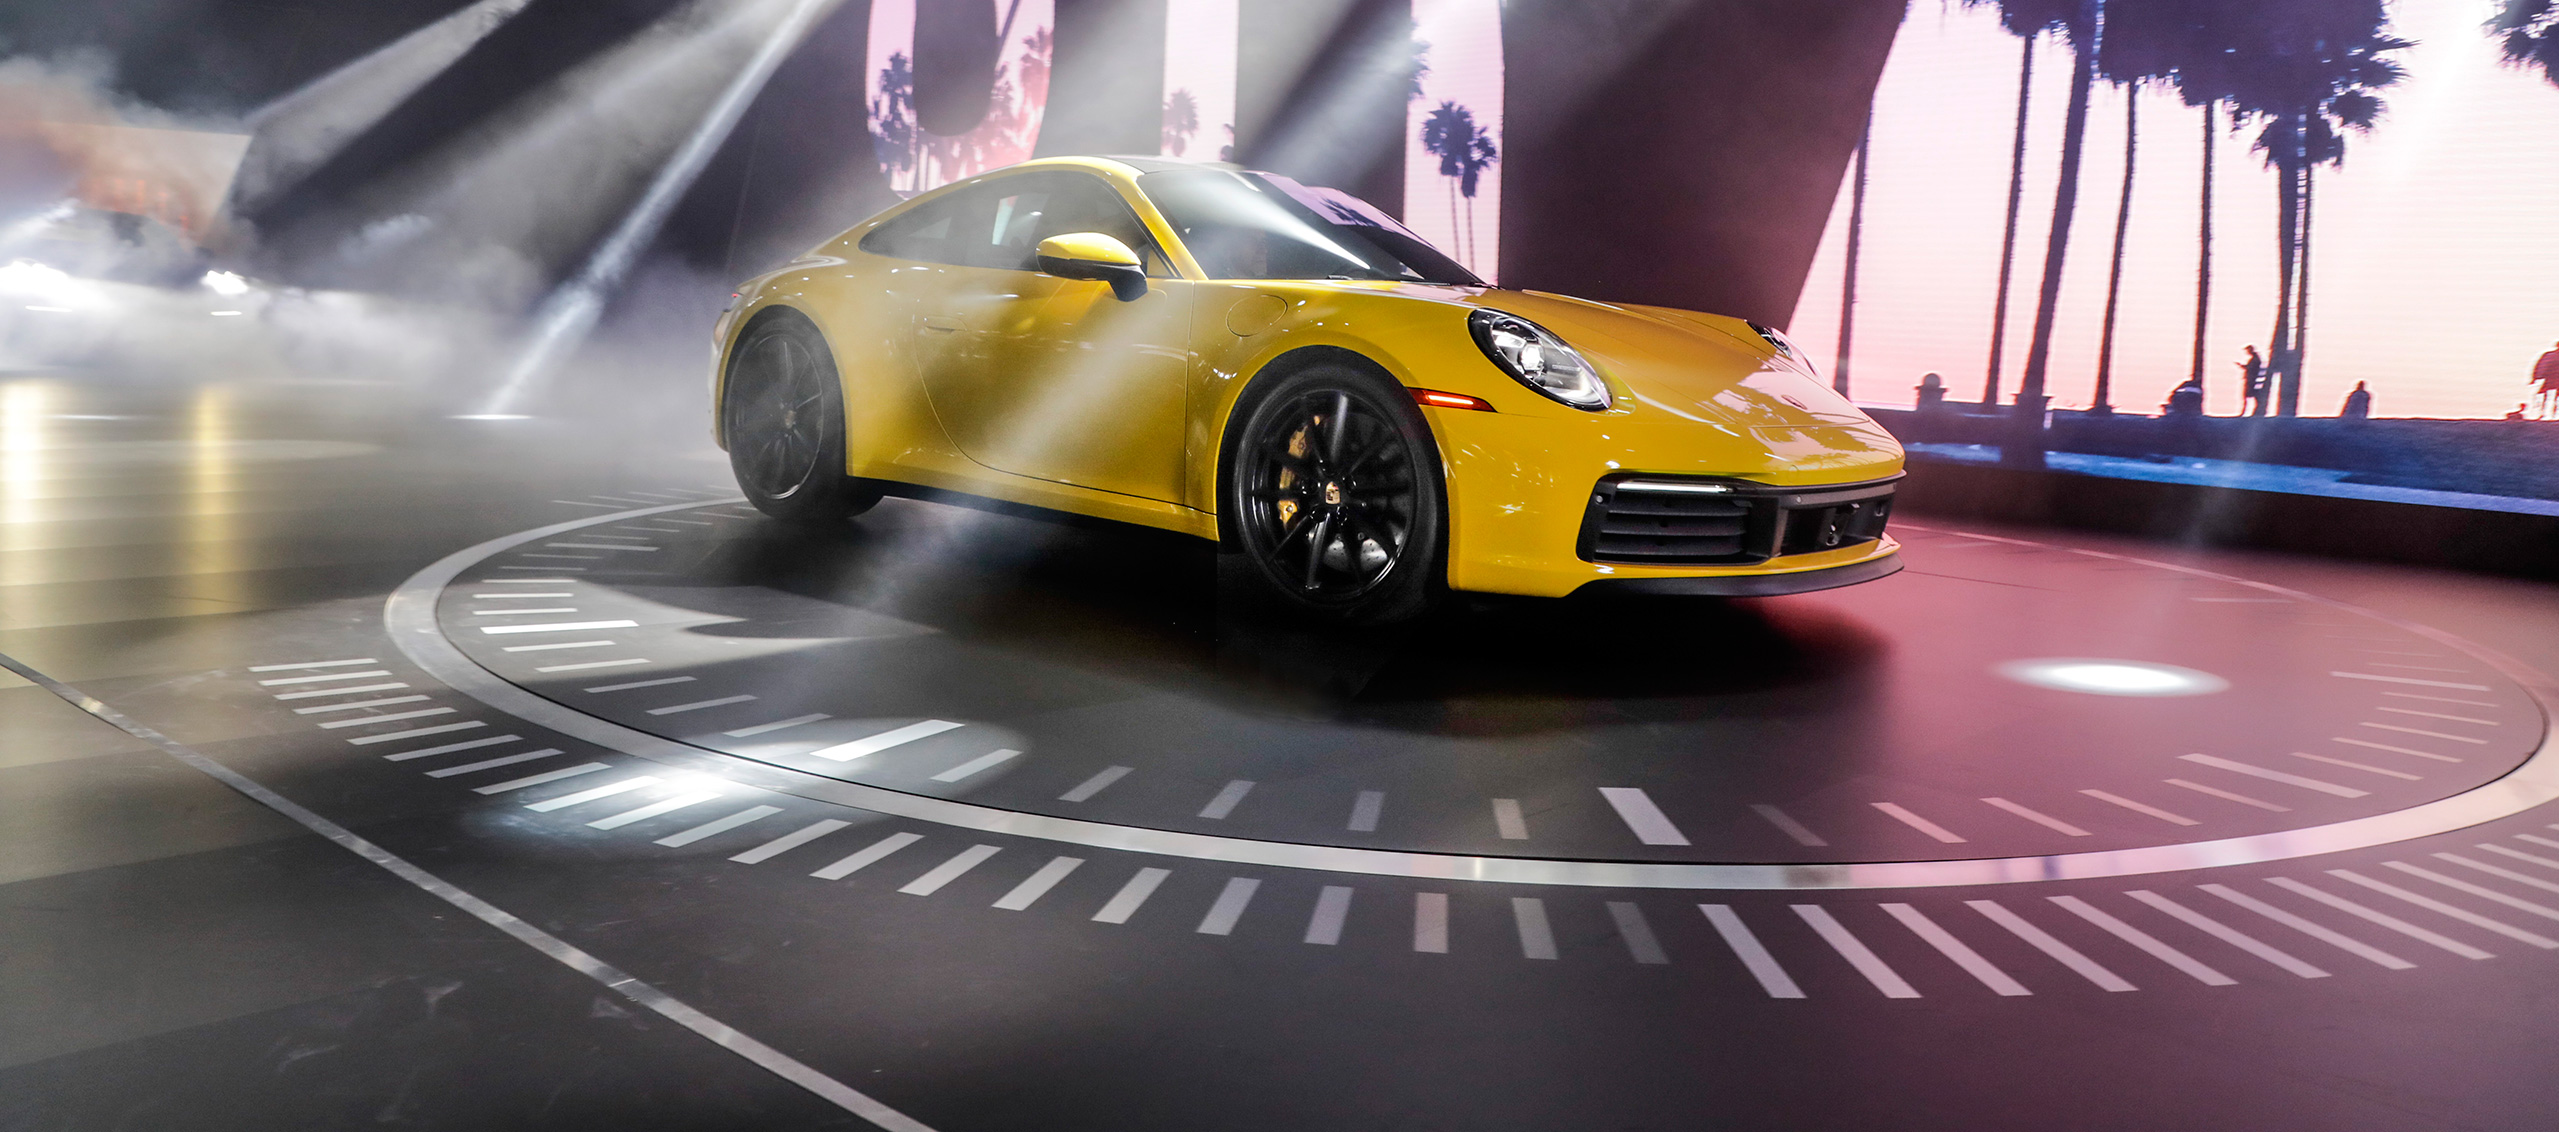 Porsche 911, octava generación de un mito